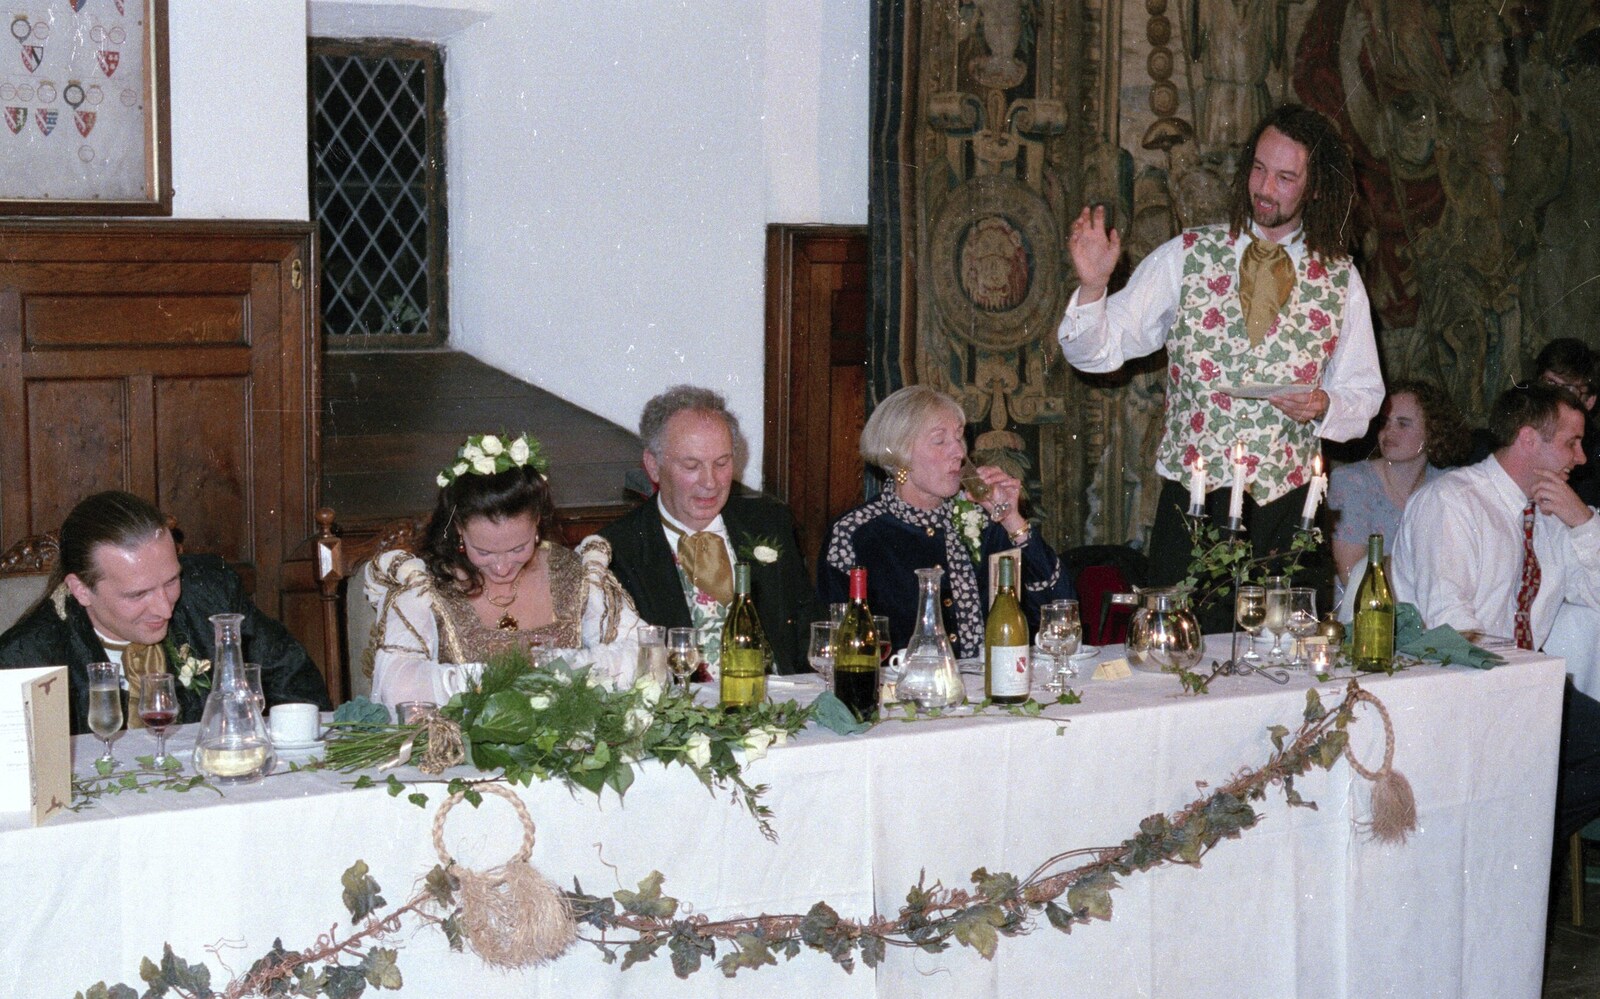 Stuart and Sarah's CISU Wedding, Naworth Castle, Brampton, Cumbria - 21st September 1996: A speech moment from the best man